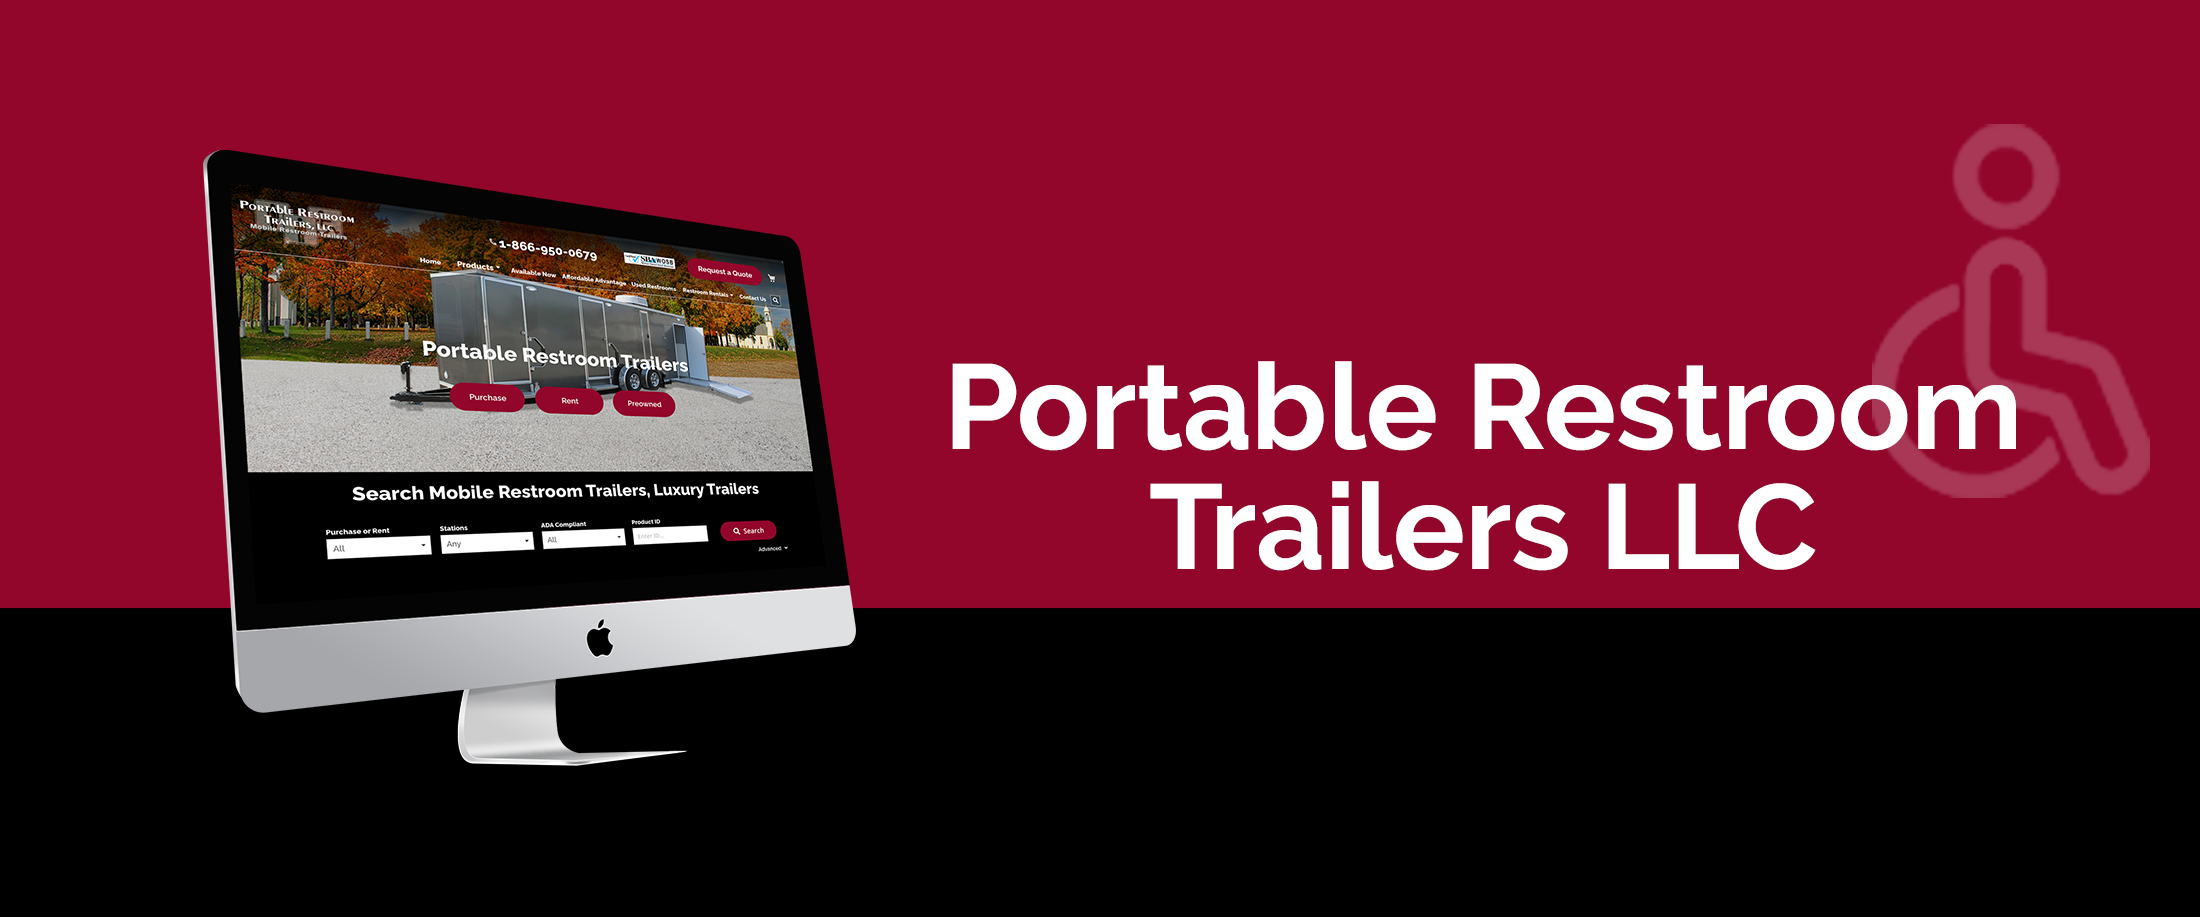 Portable Restroom Trailers banner